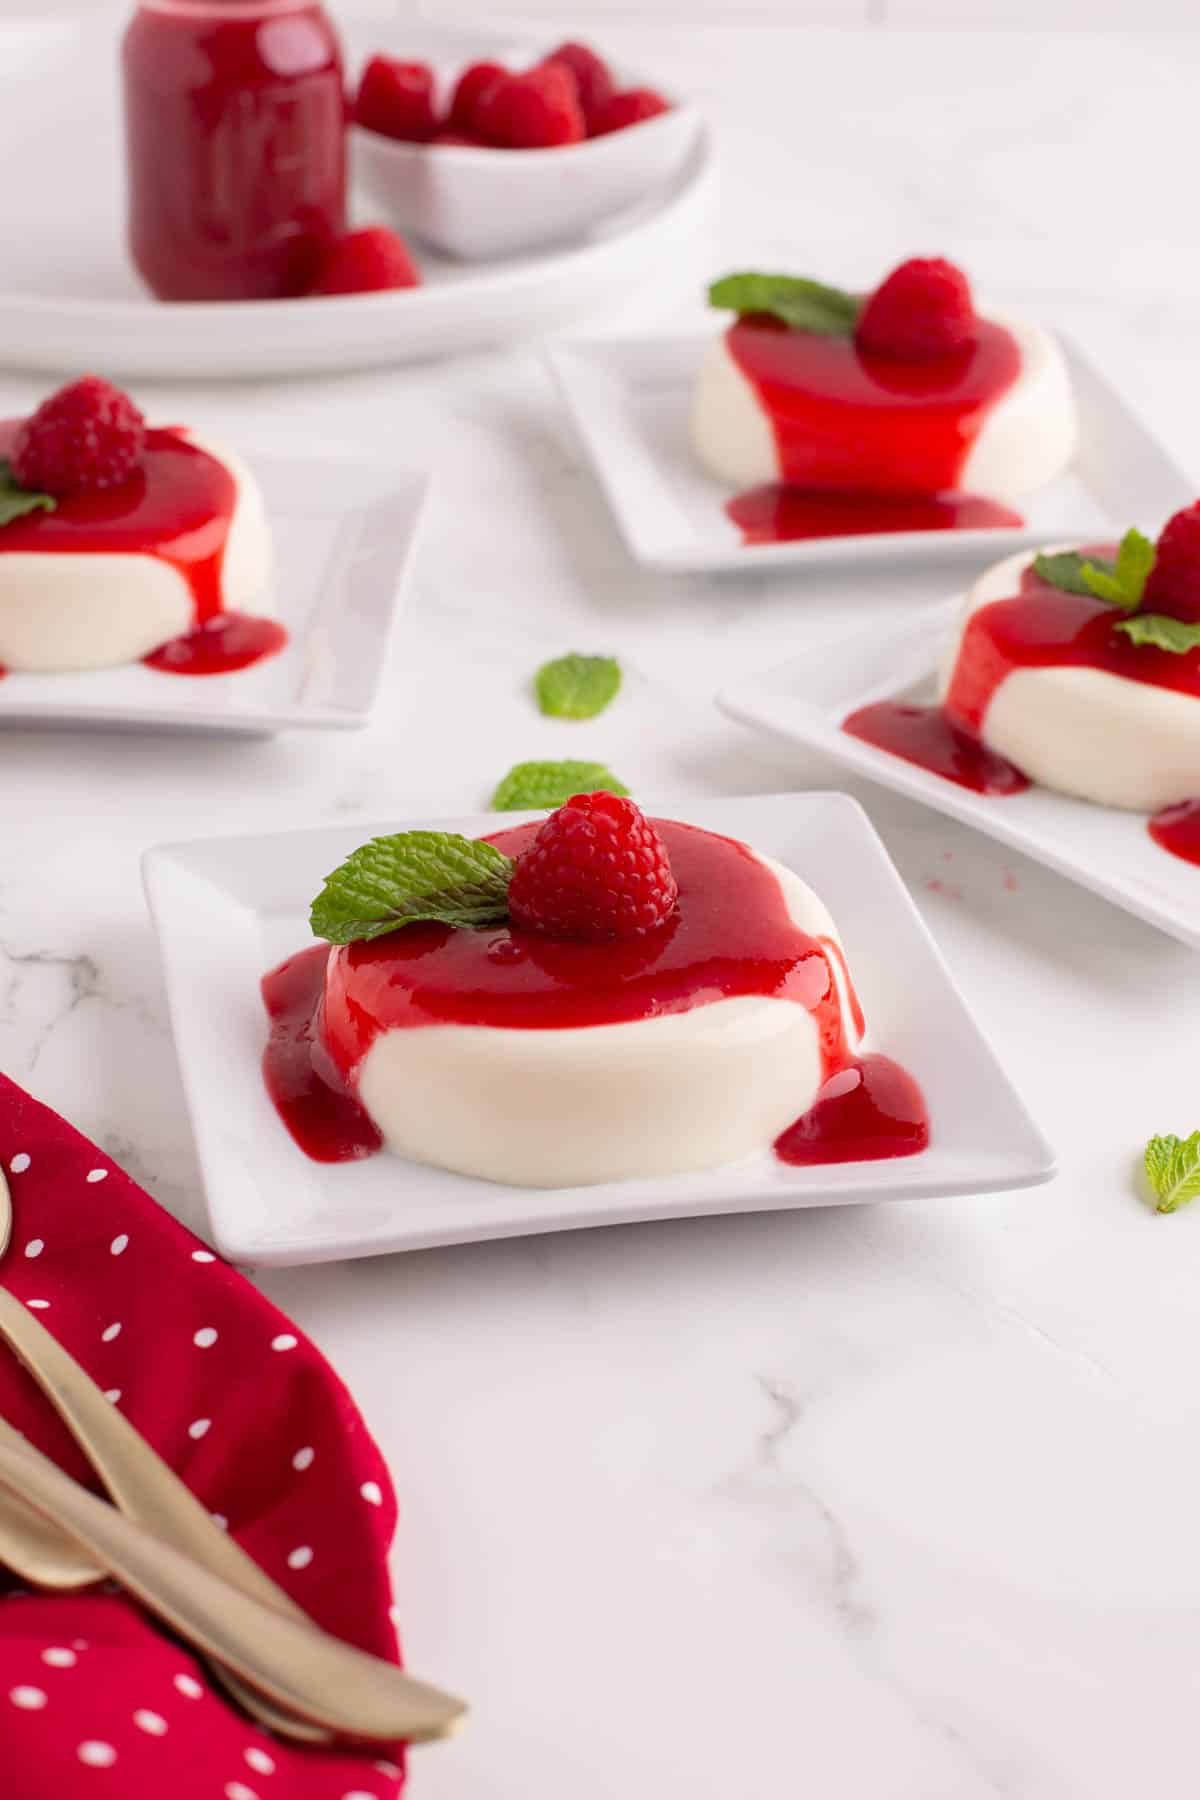 Servings of vanilla panna cotta with raspberry sauce on white plates.